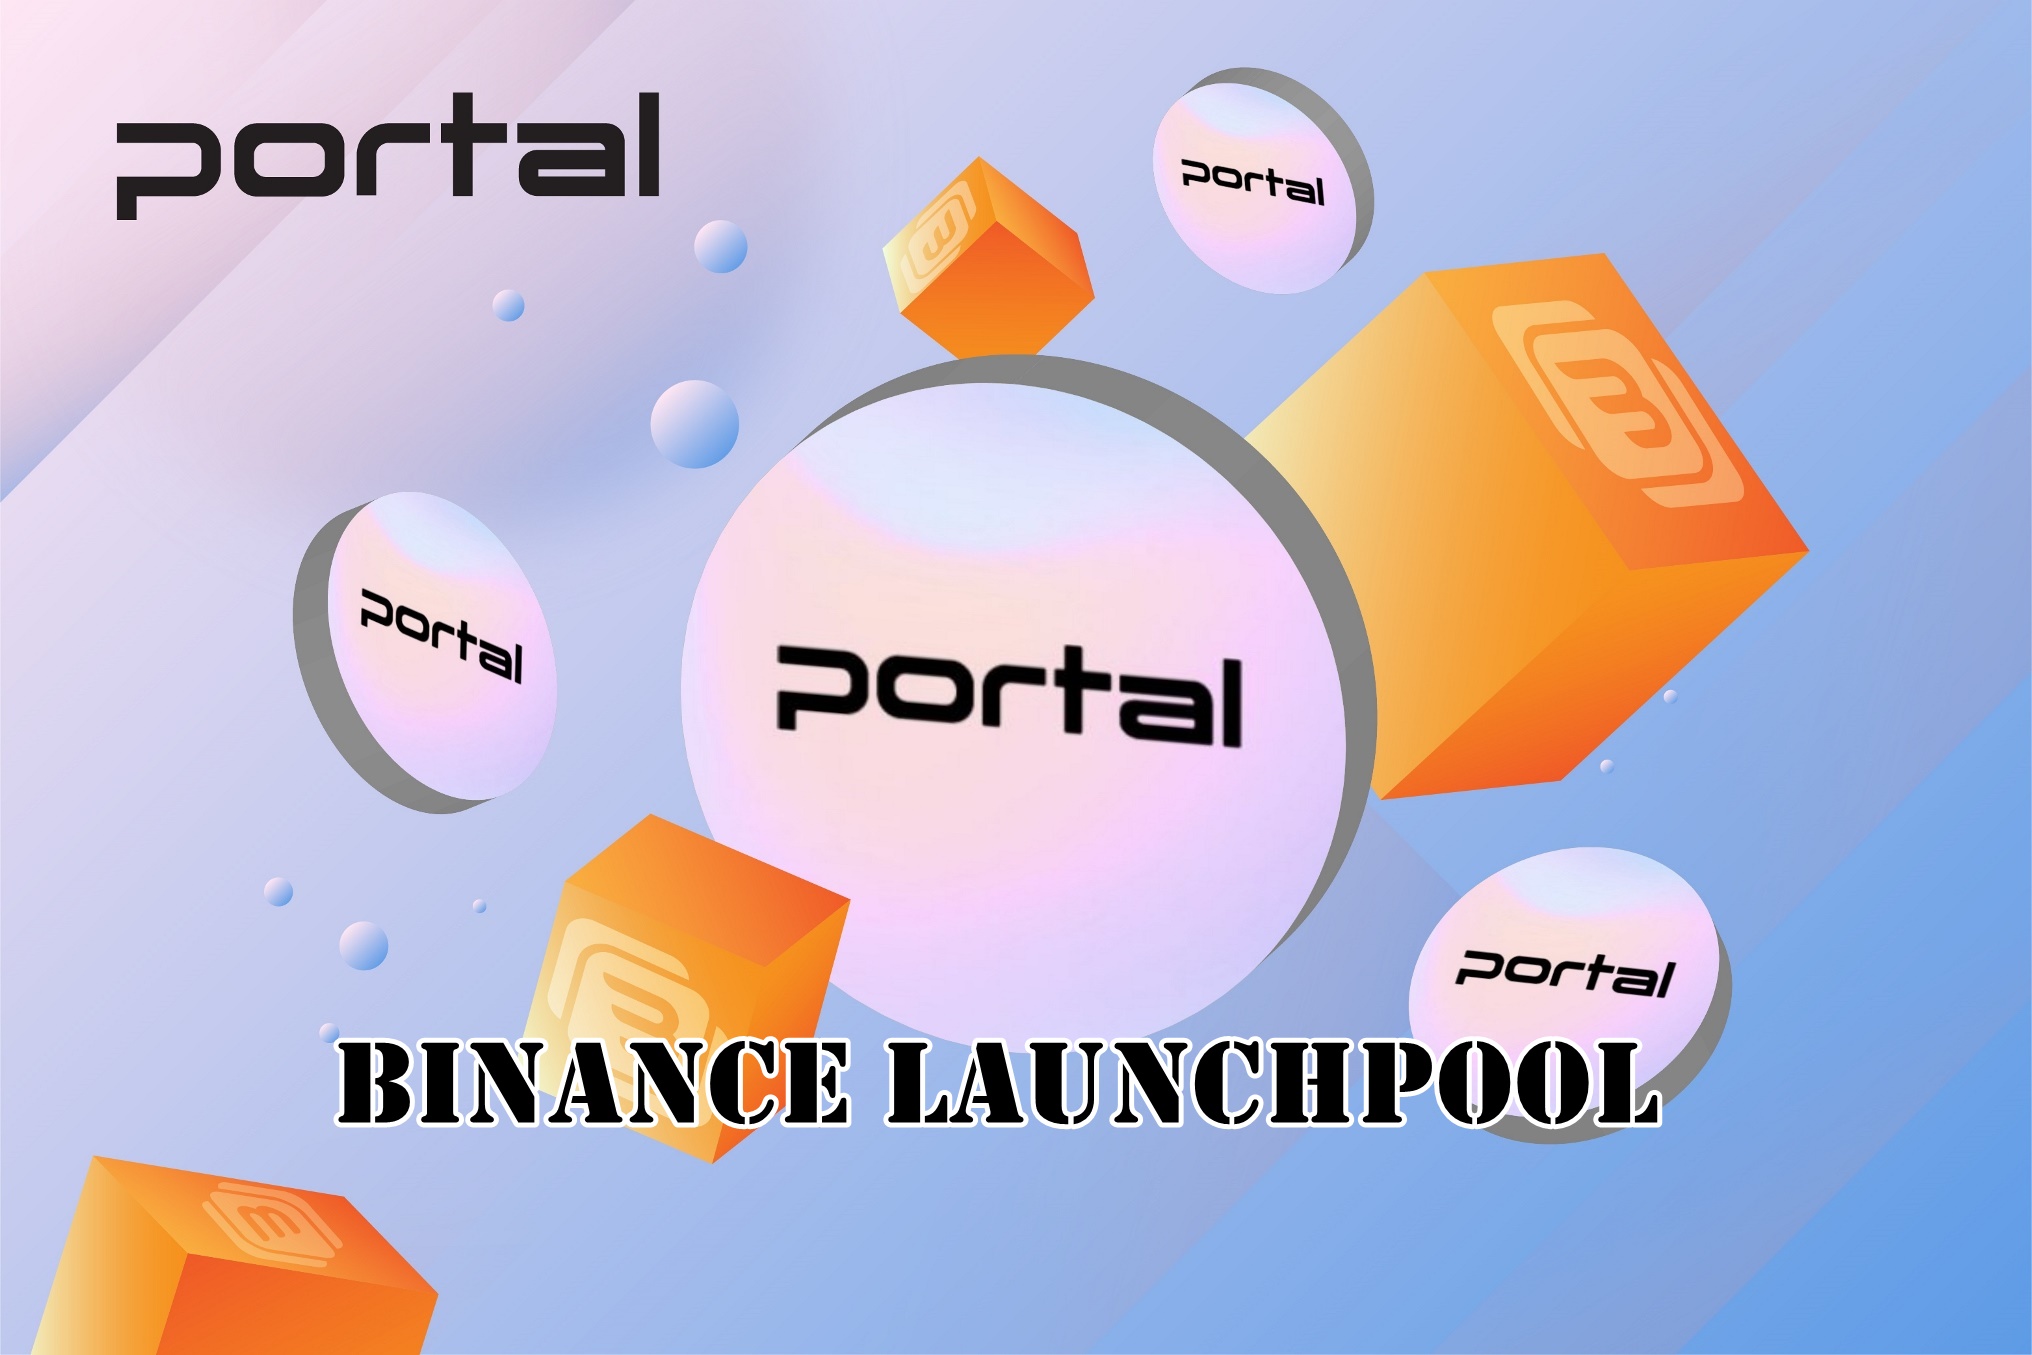 Portal Binance Launchpool